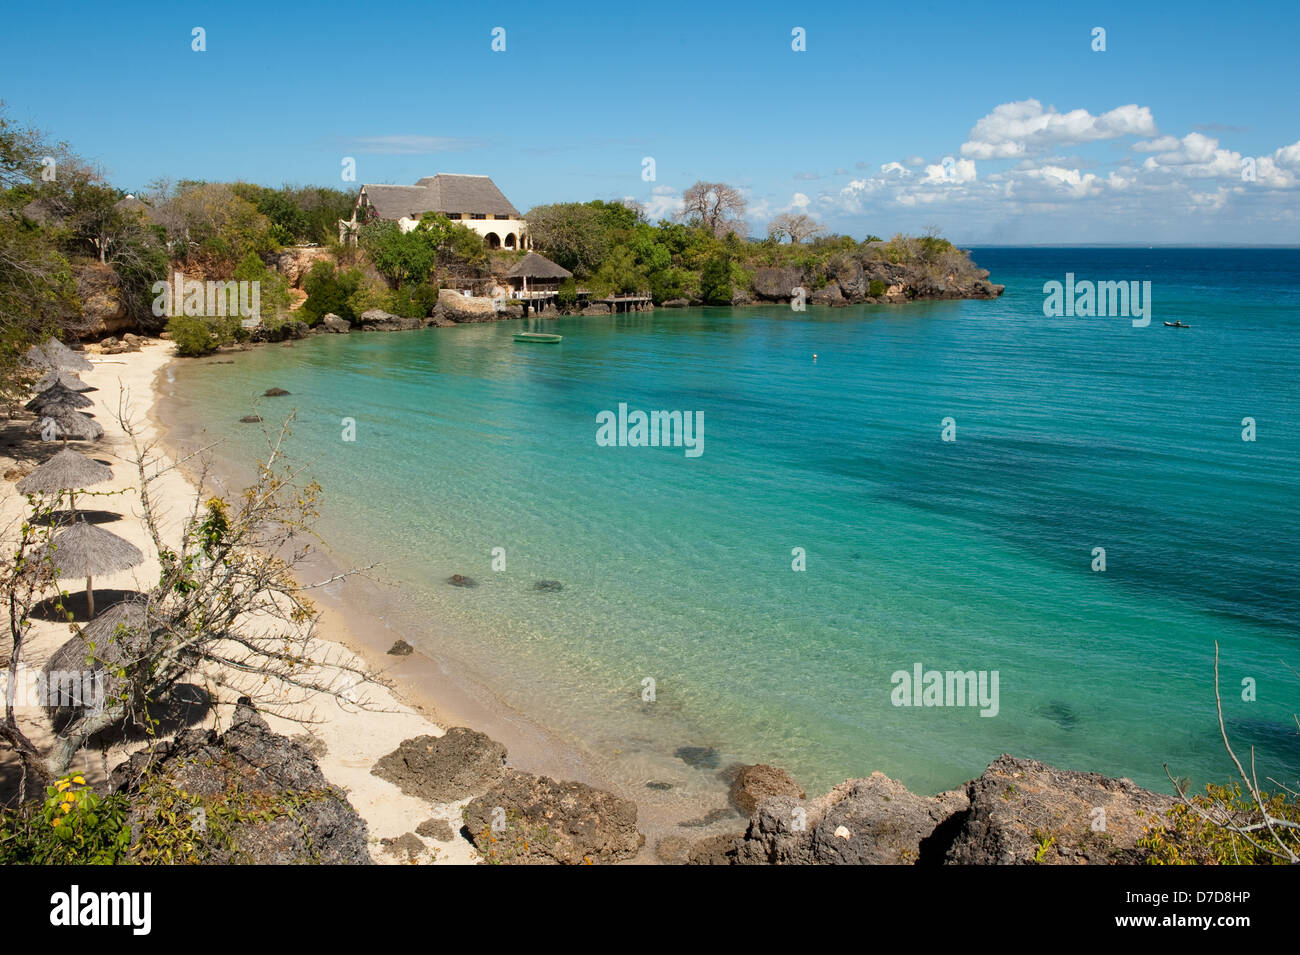 Beach at Londo Lodge, Londo Lodge, Pemba, Mozambique Stock Photo